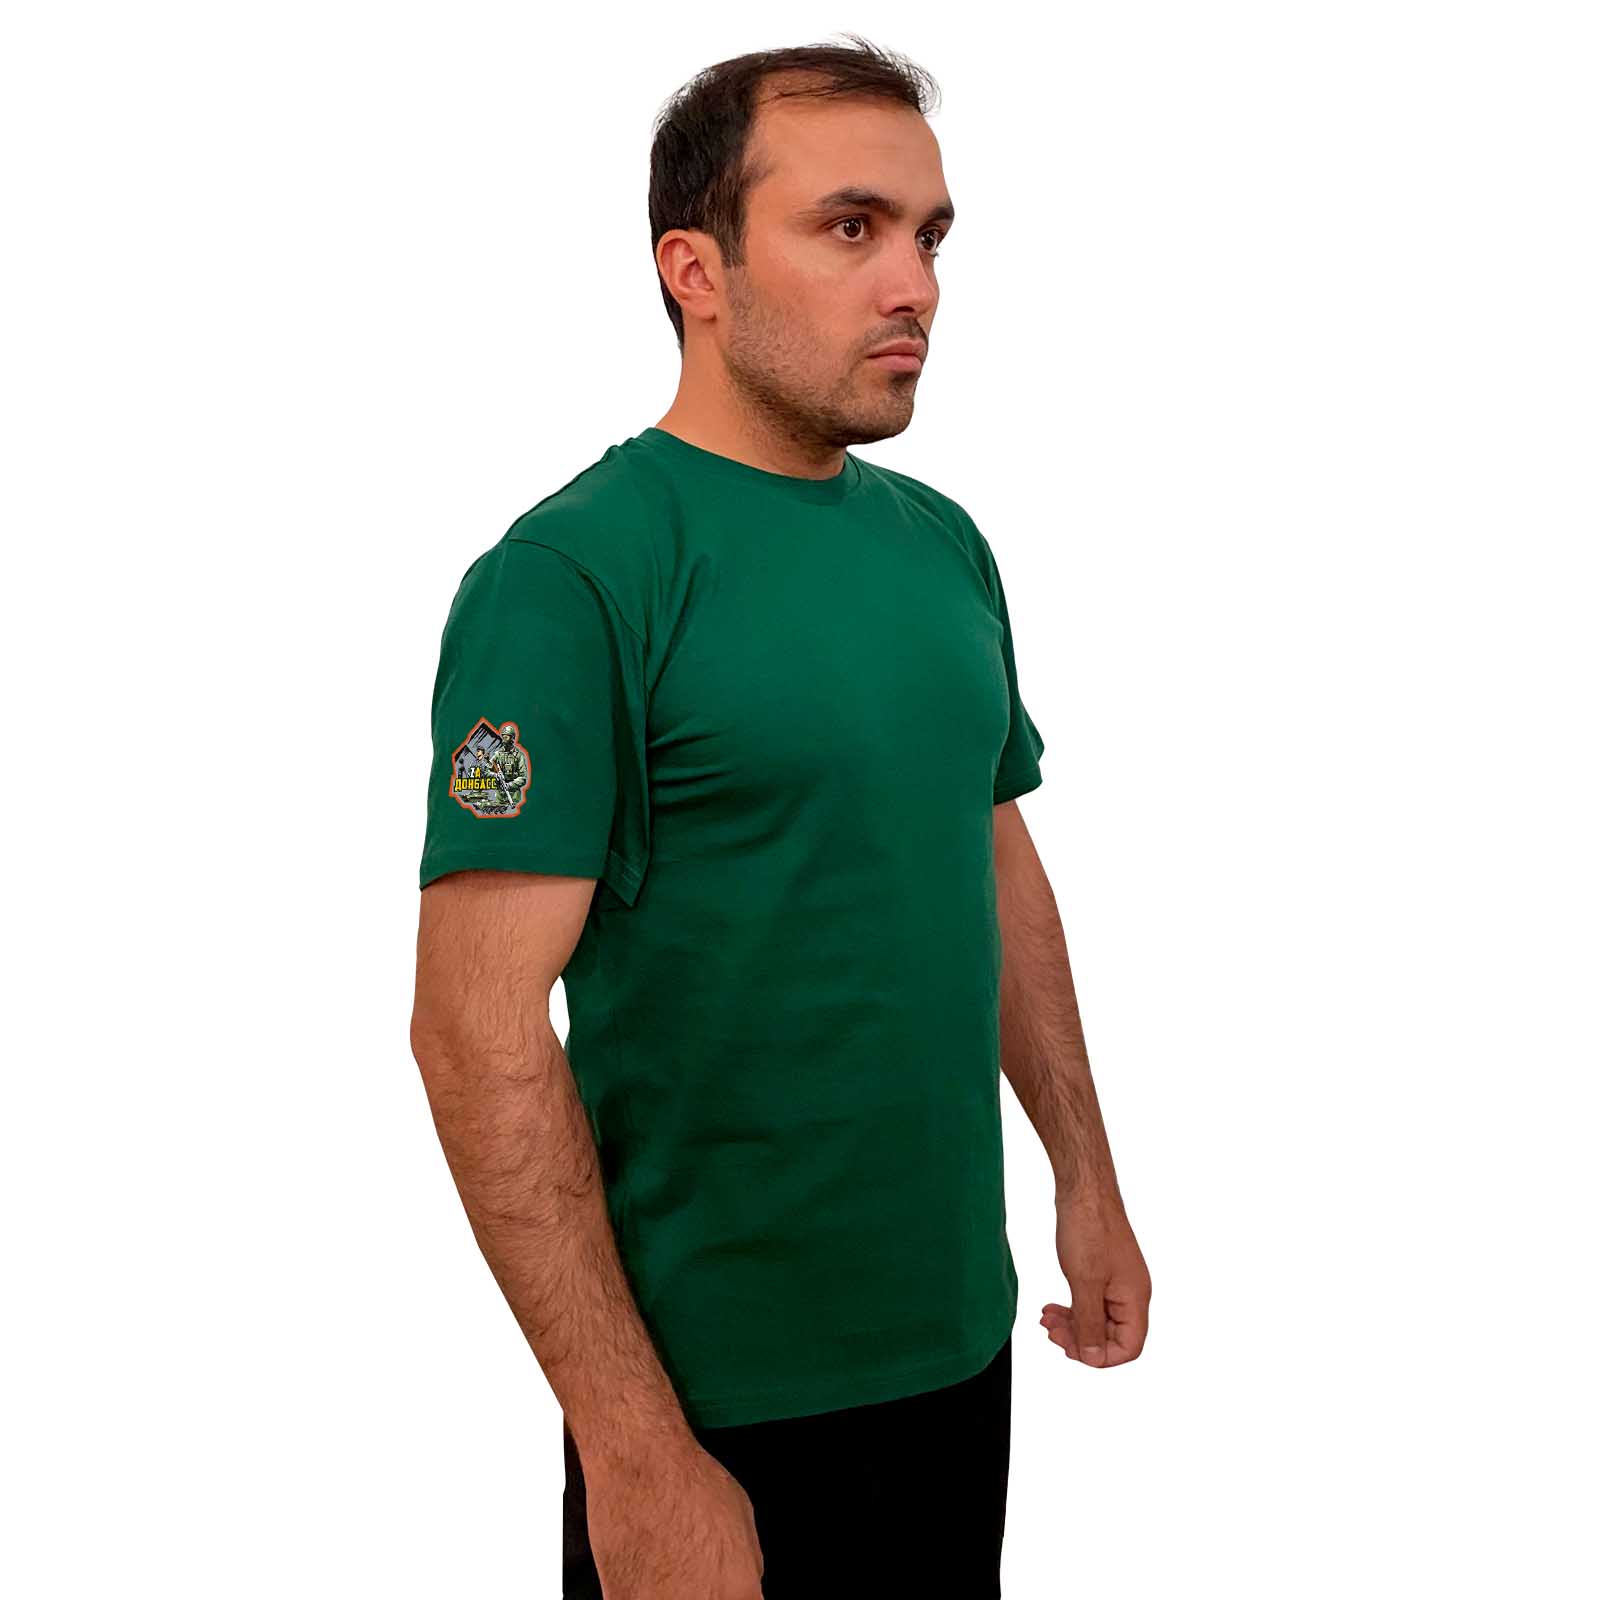 Зелёная футболка с термотрансфером "Zа Донбасс" на рукаве